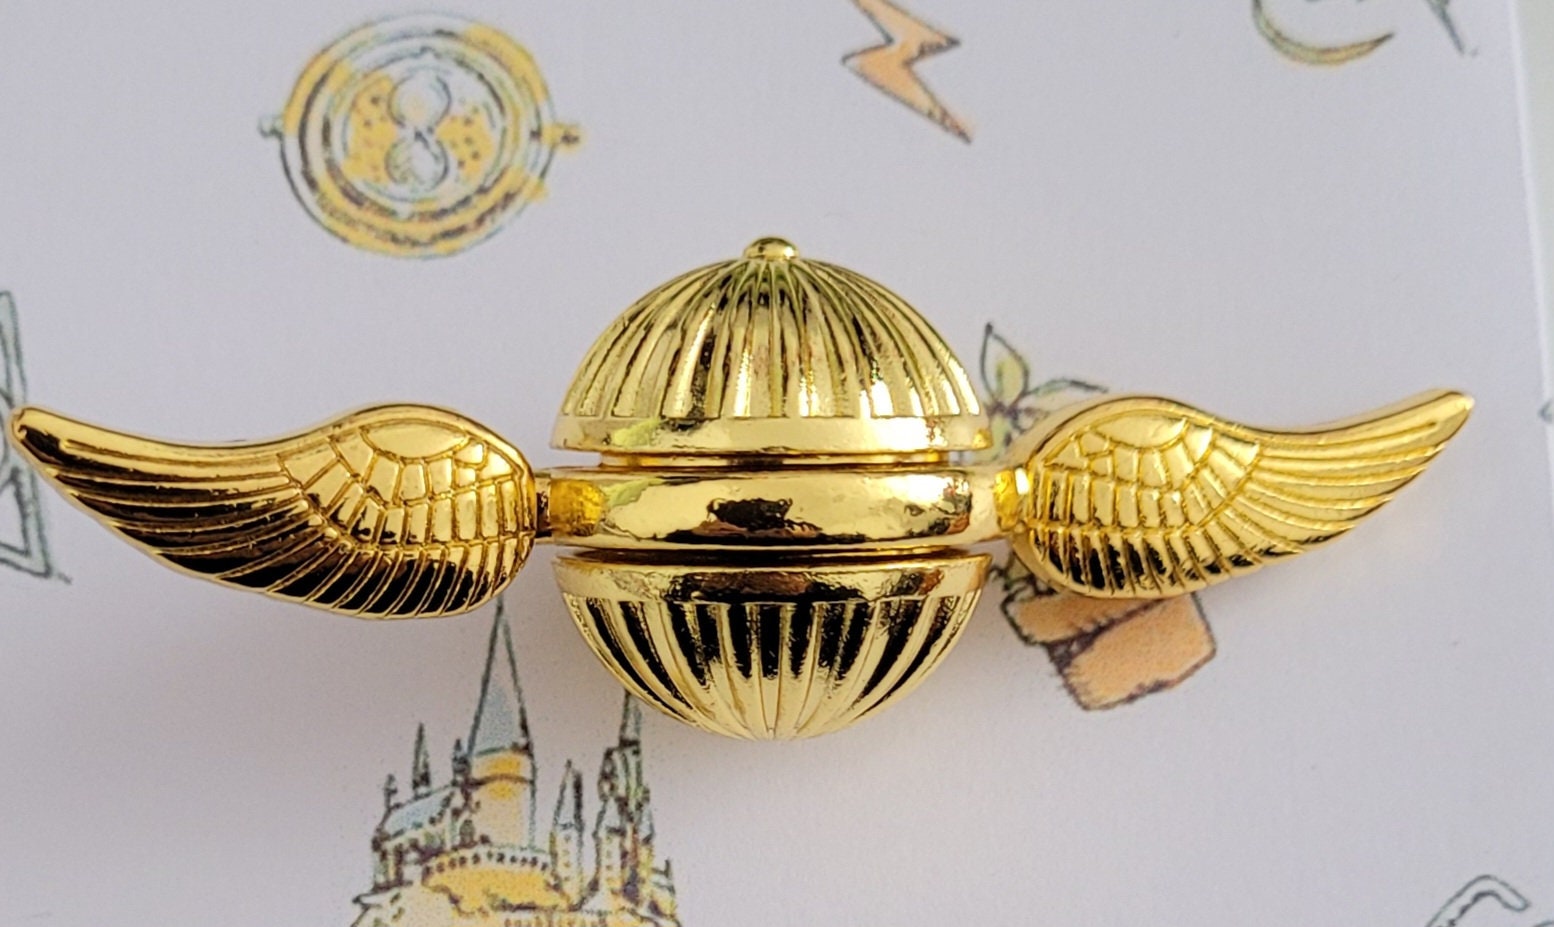 ELECTRO CART Golden Snitch Fidget Spinner for Harry Potter Fans